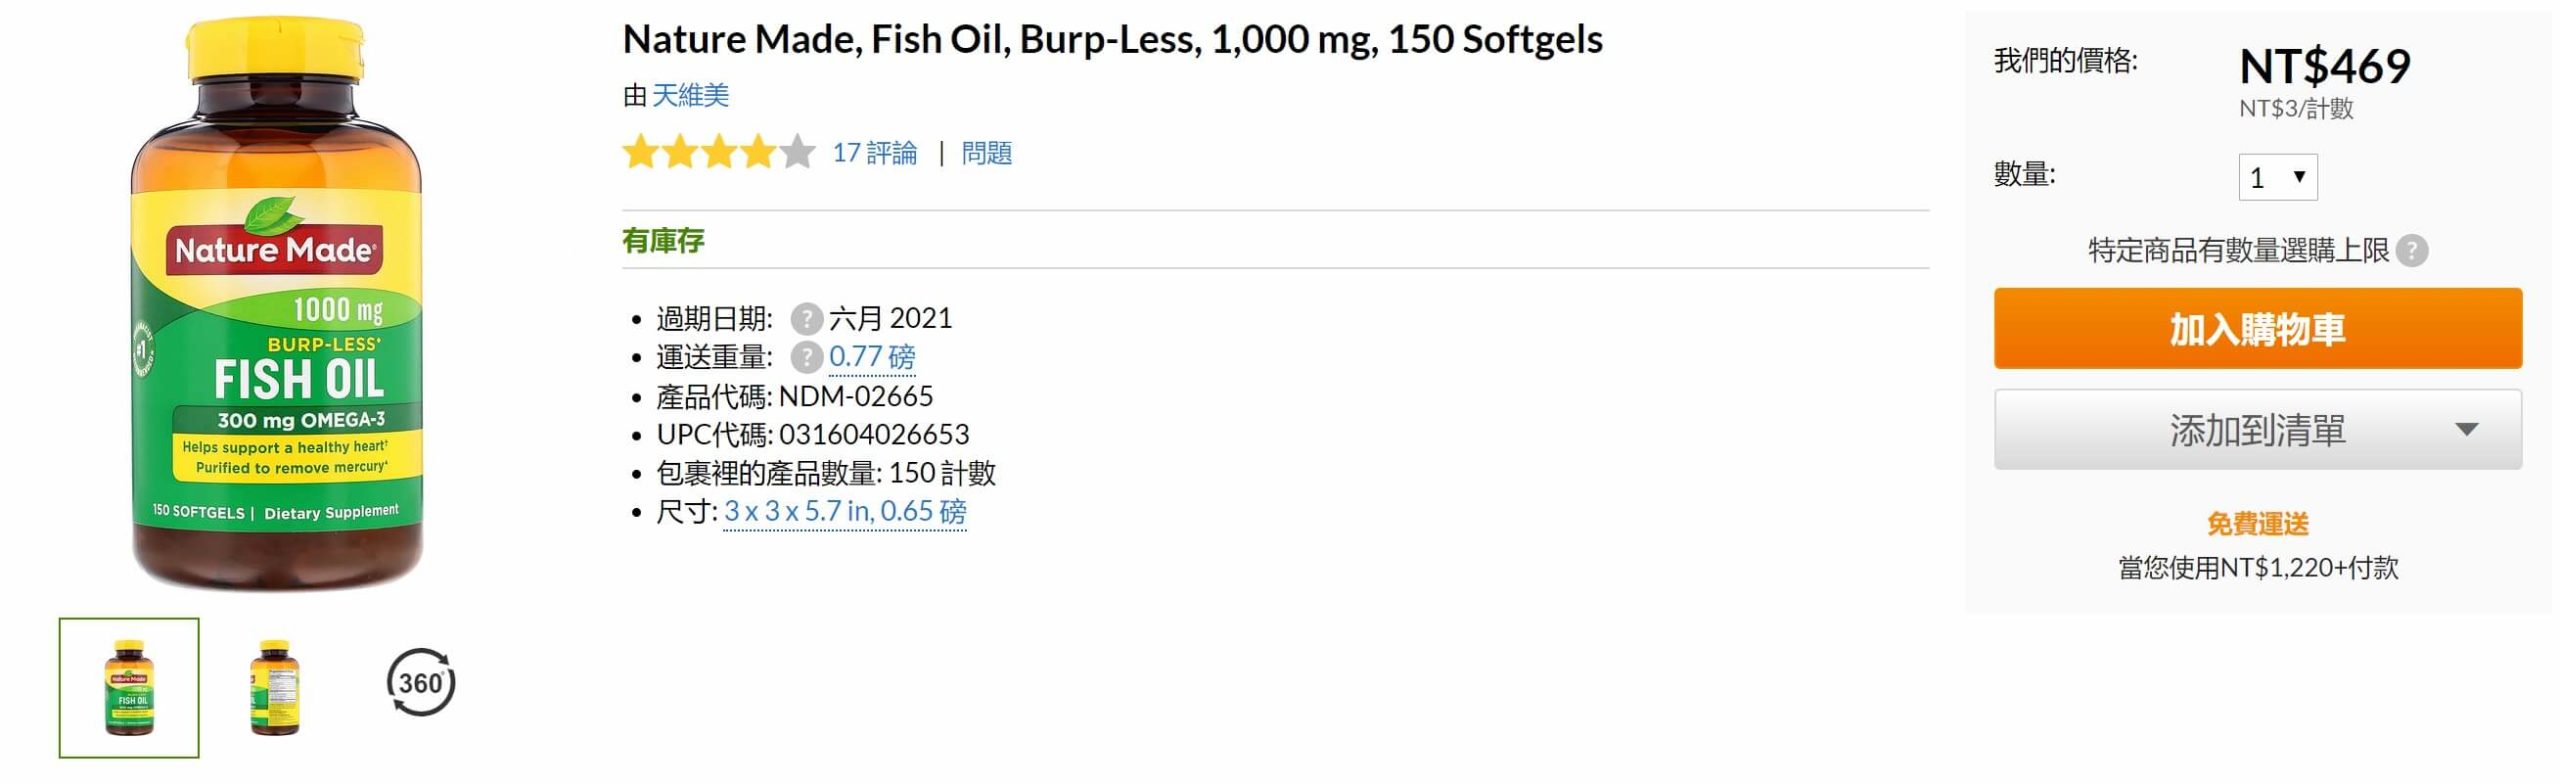 Nature Made, Fish Oil, Burp-Less, 1,000 mg, 150 Softgels